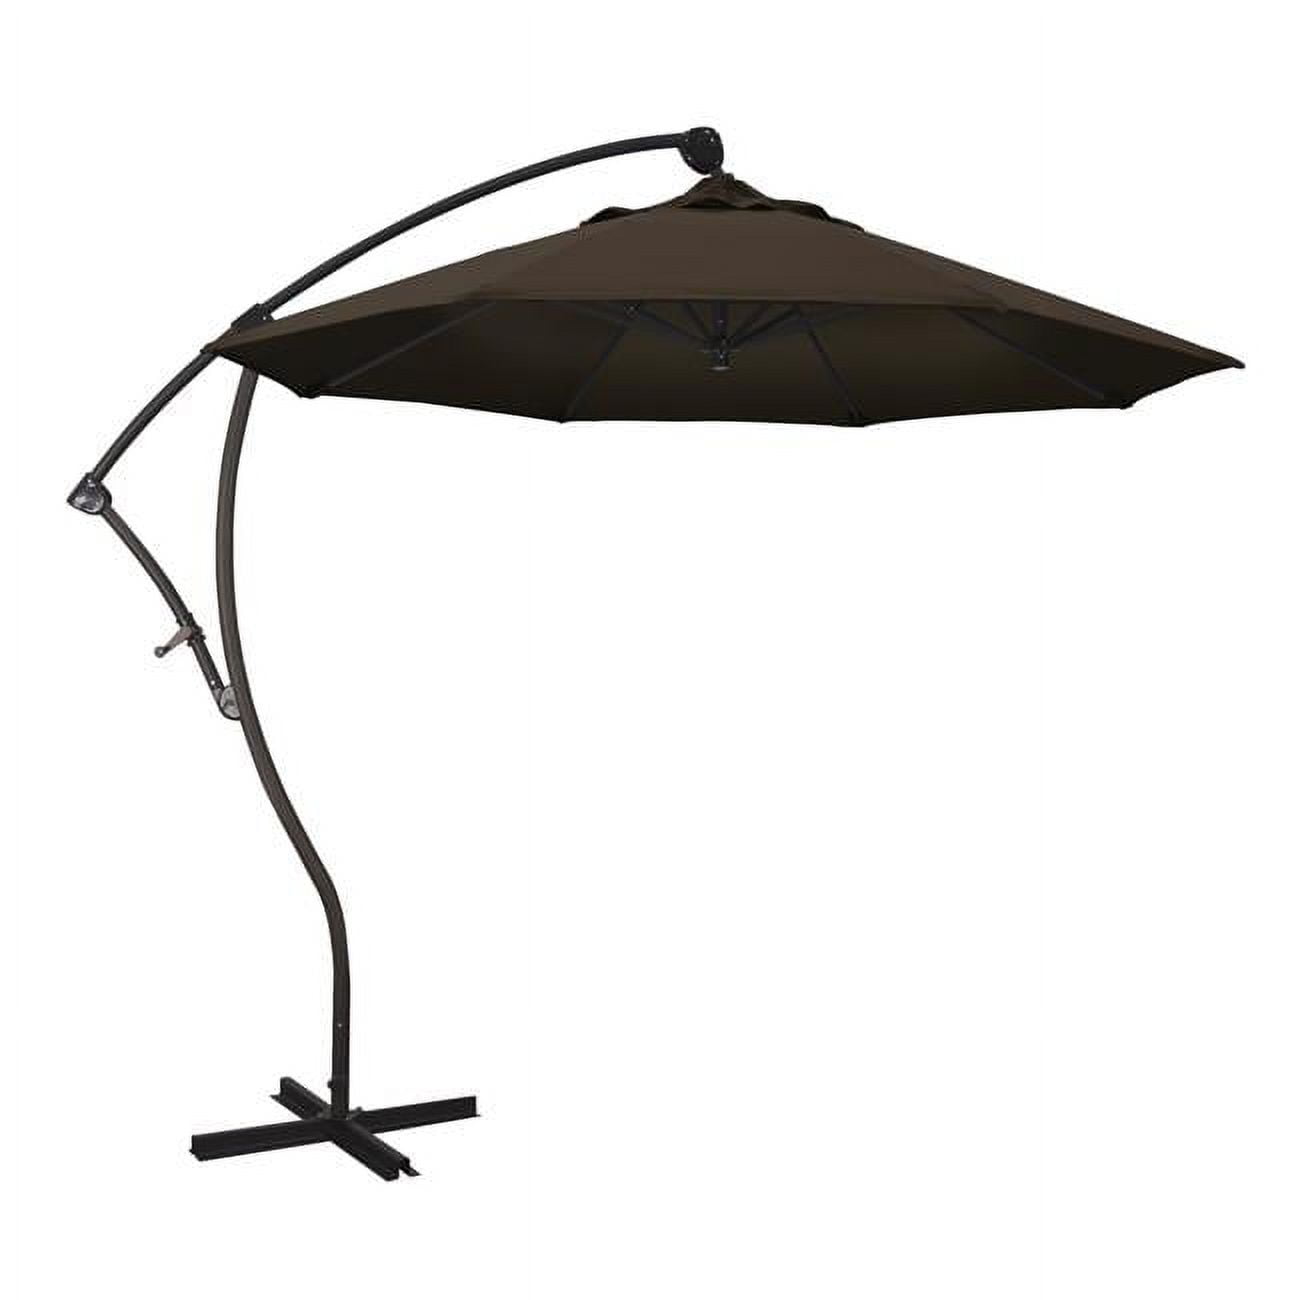 Ba908117-sa32 Bayside Bronze Market Umbrella, Mocha - 9 Ft. X 8 Ribs